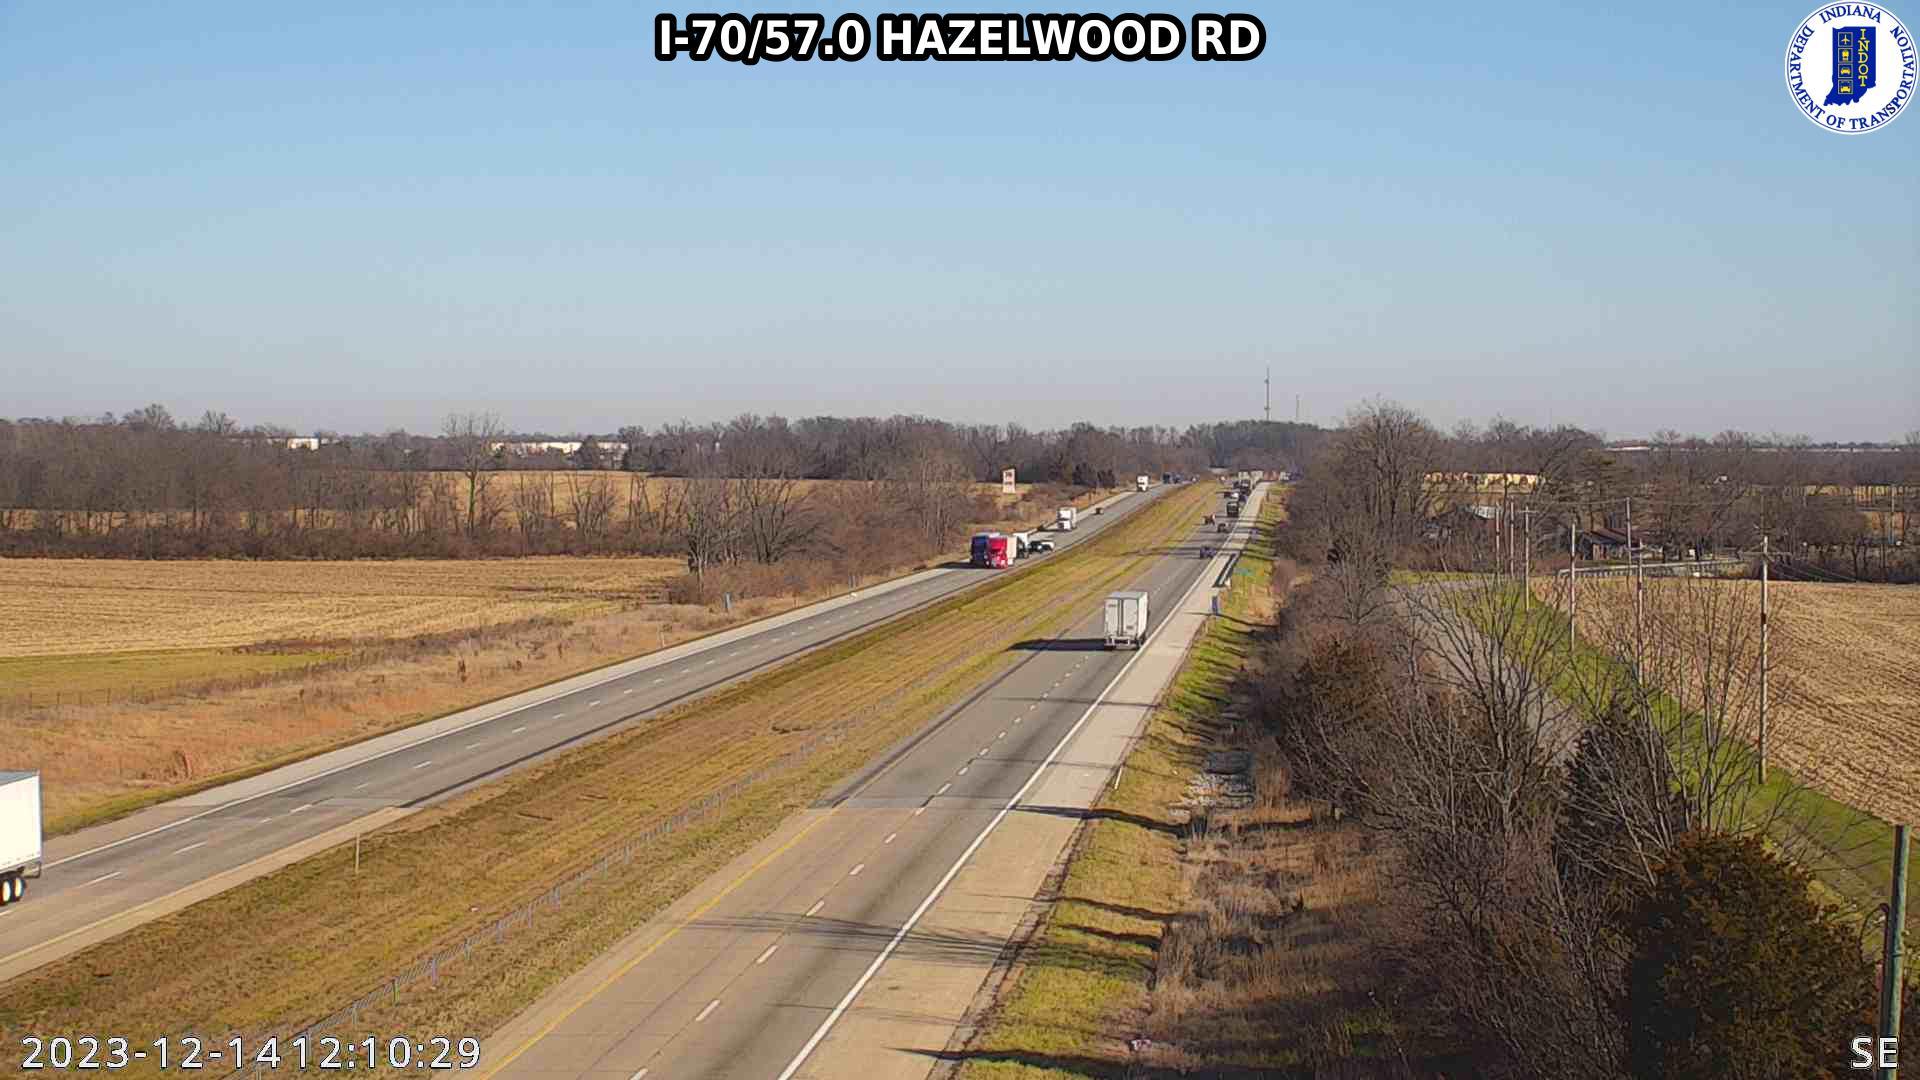 Hazelwood: I-70: I-70/57.0 - RD Traffic Camera